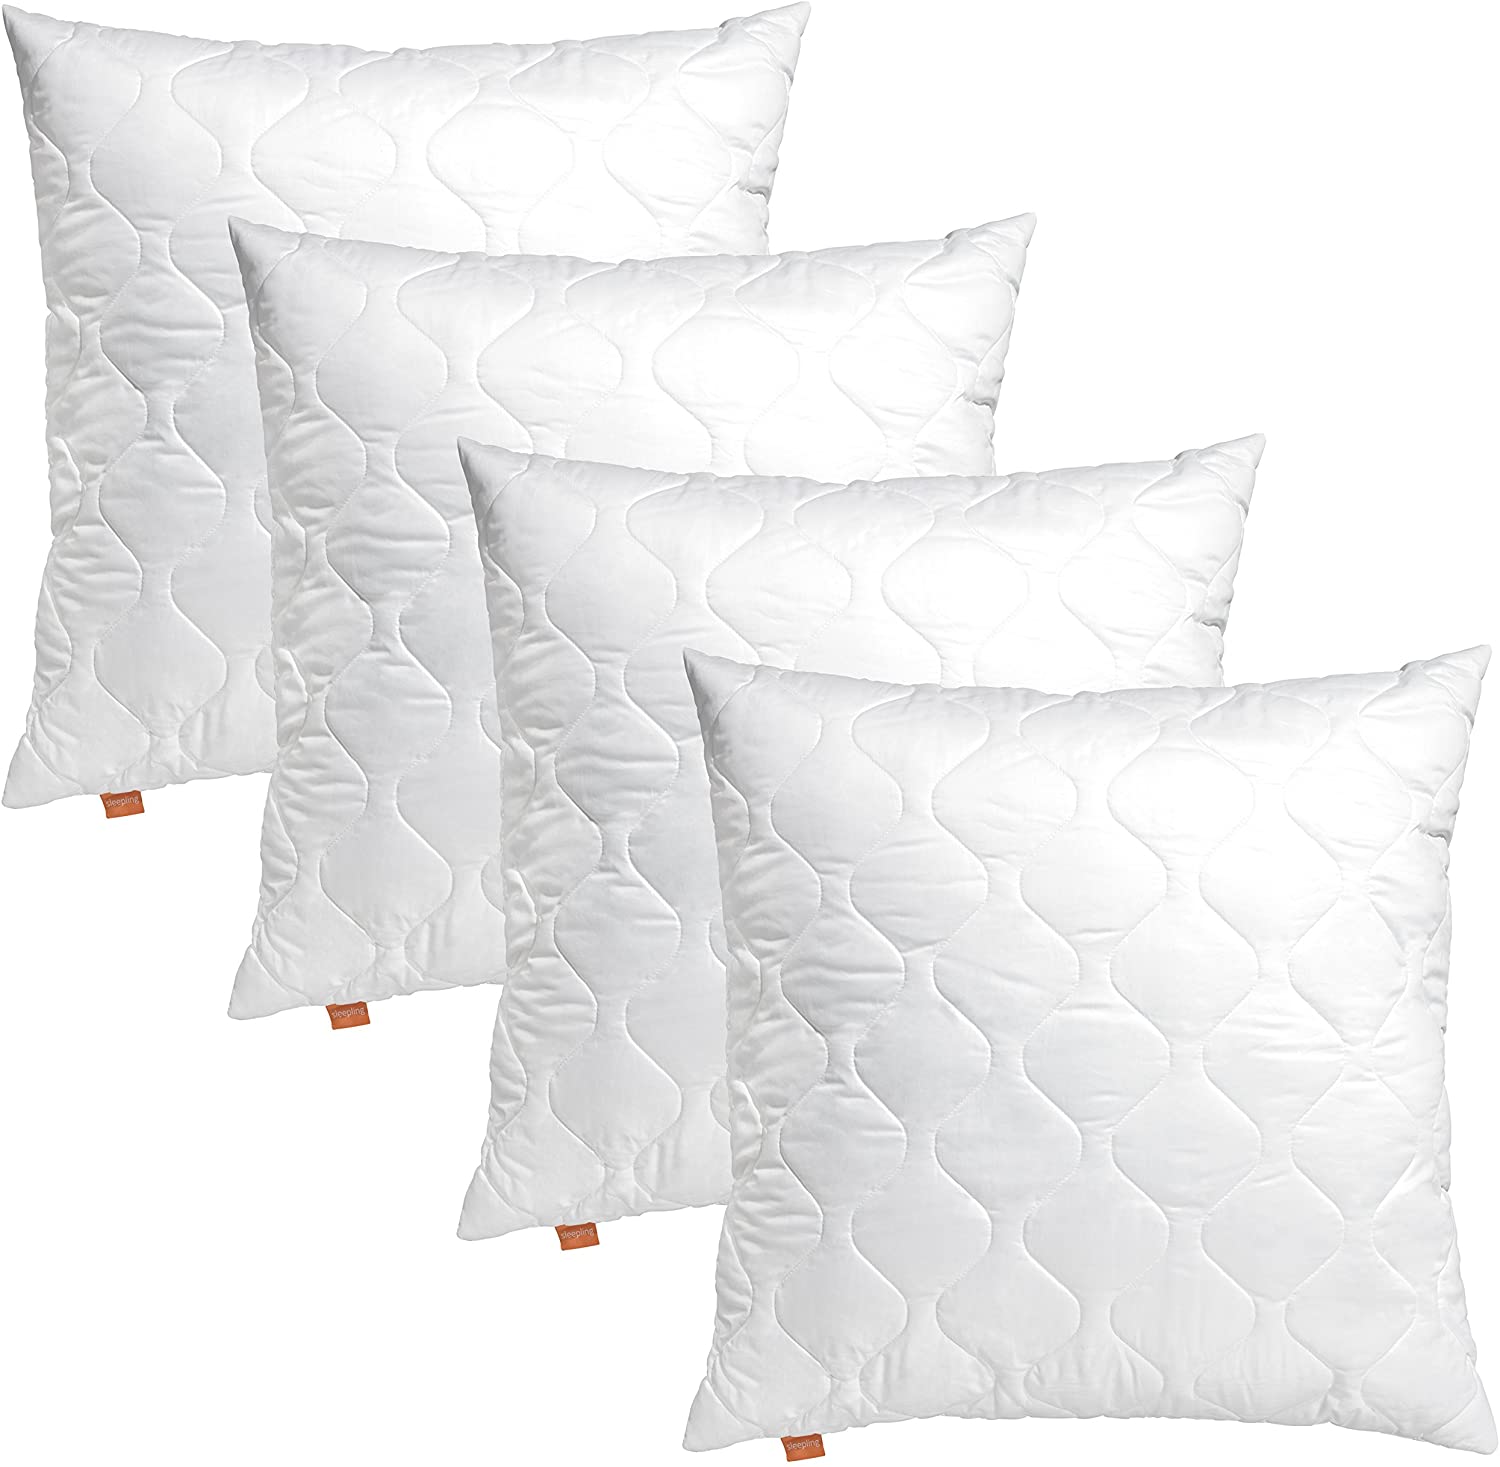 Sleepling Basic 100 190001-P Pillow Microfibre White